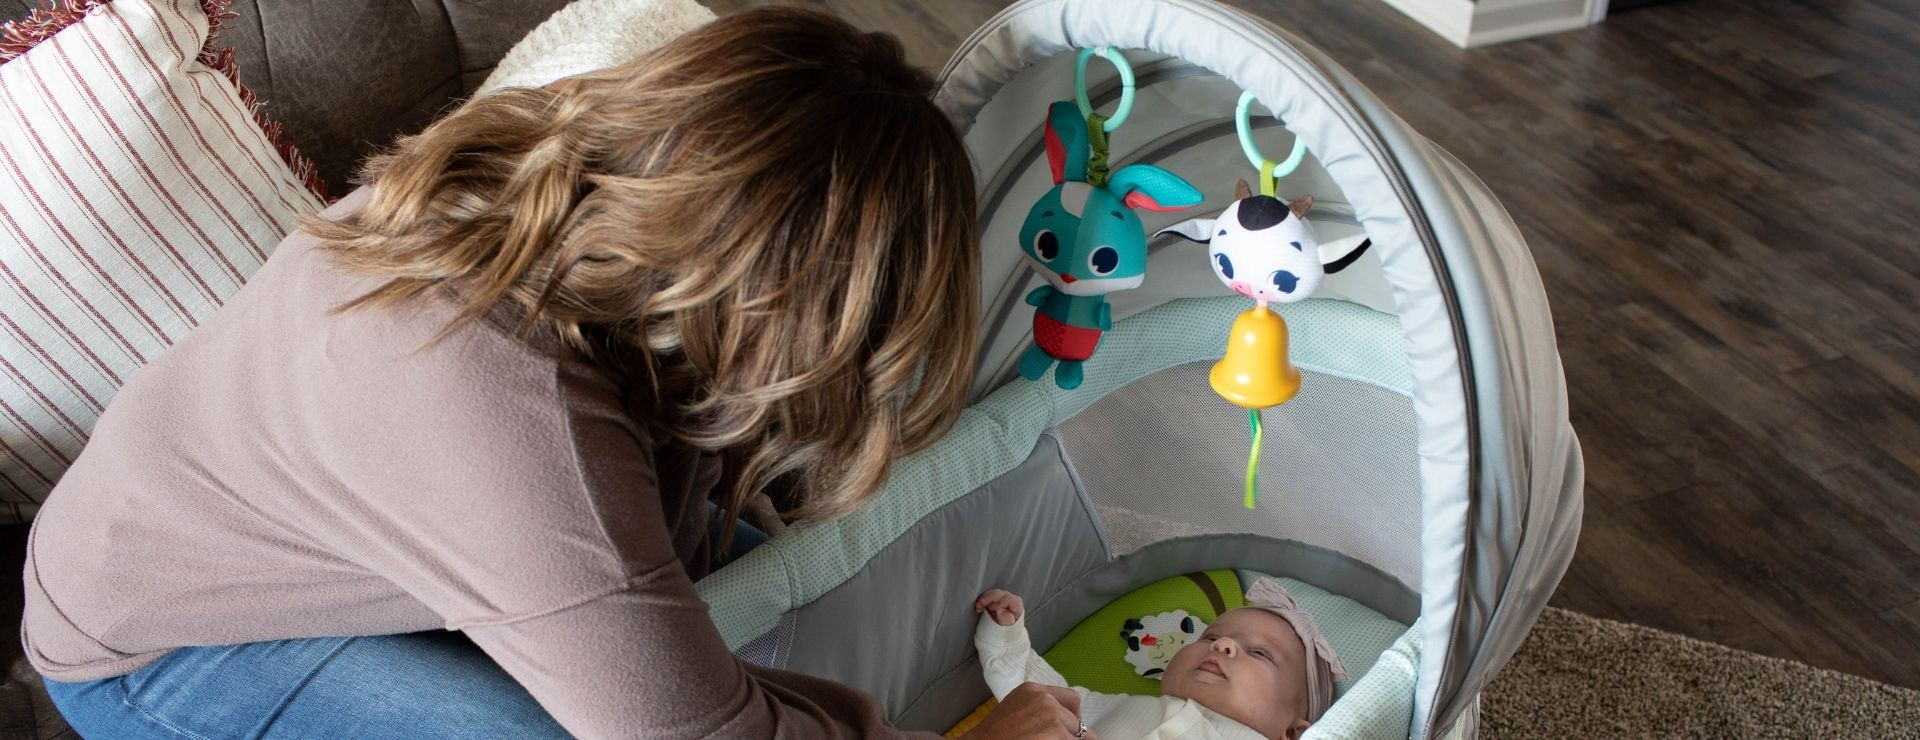 Adjustable canopy helps regulate babies’ exposure to stimulation